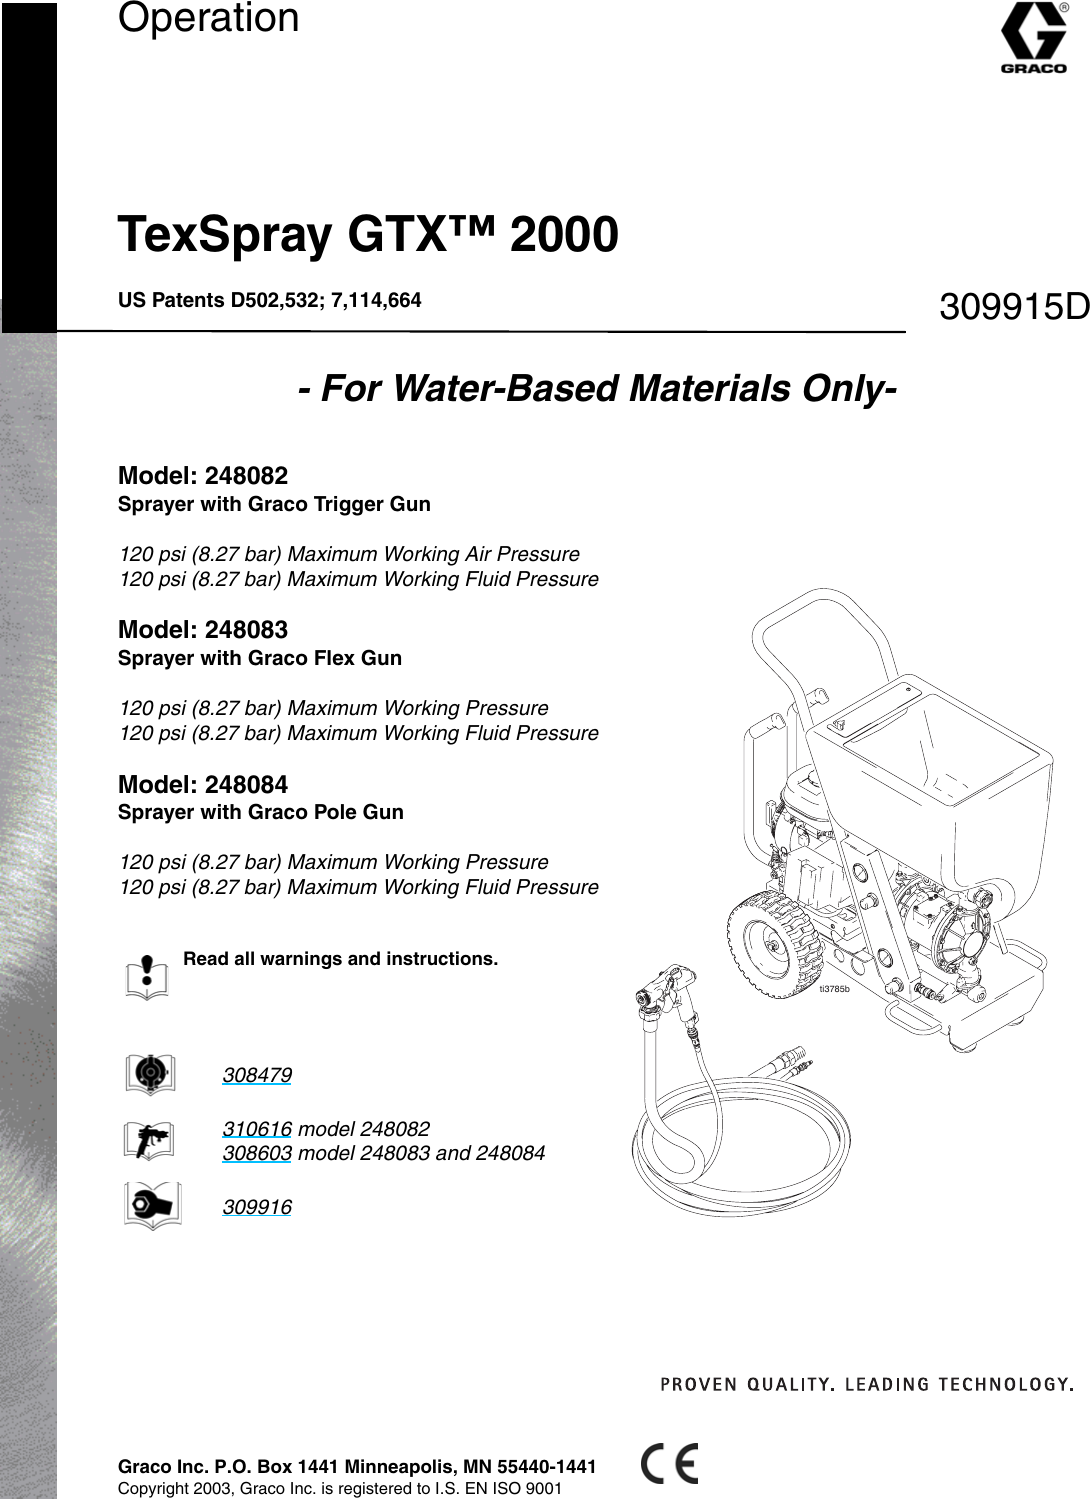 Graco Inc Texspray Gtxtm 2000 248082 Users Manual 309915D GTX